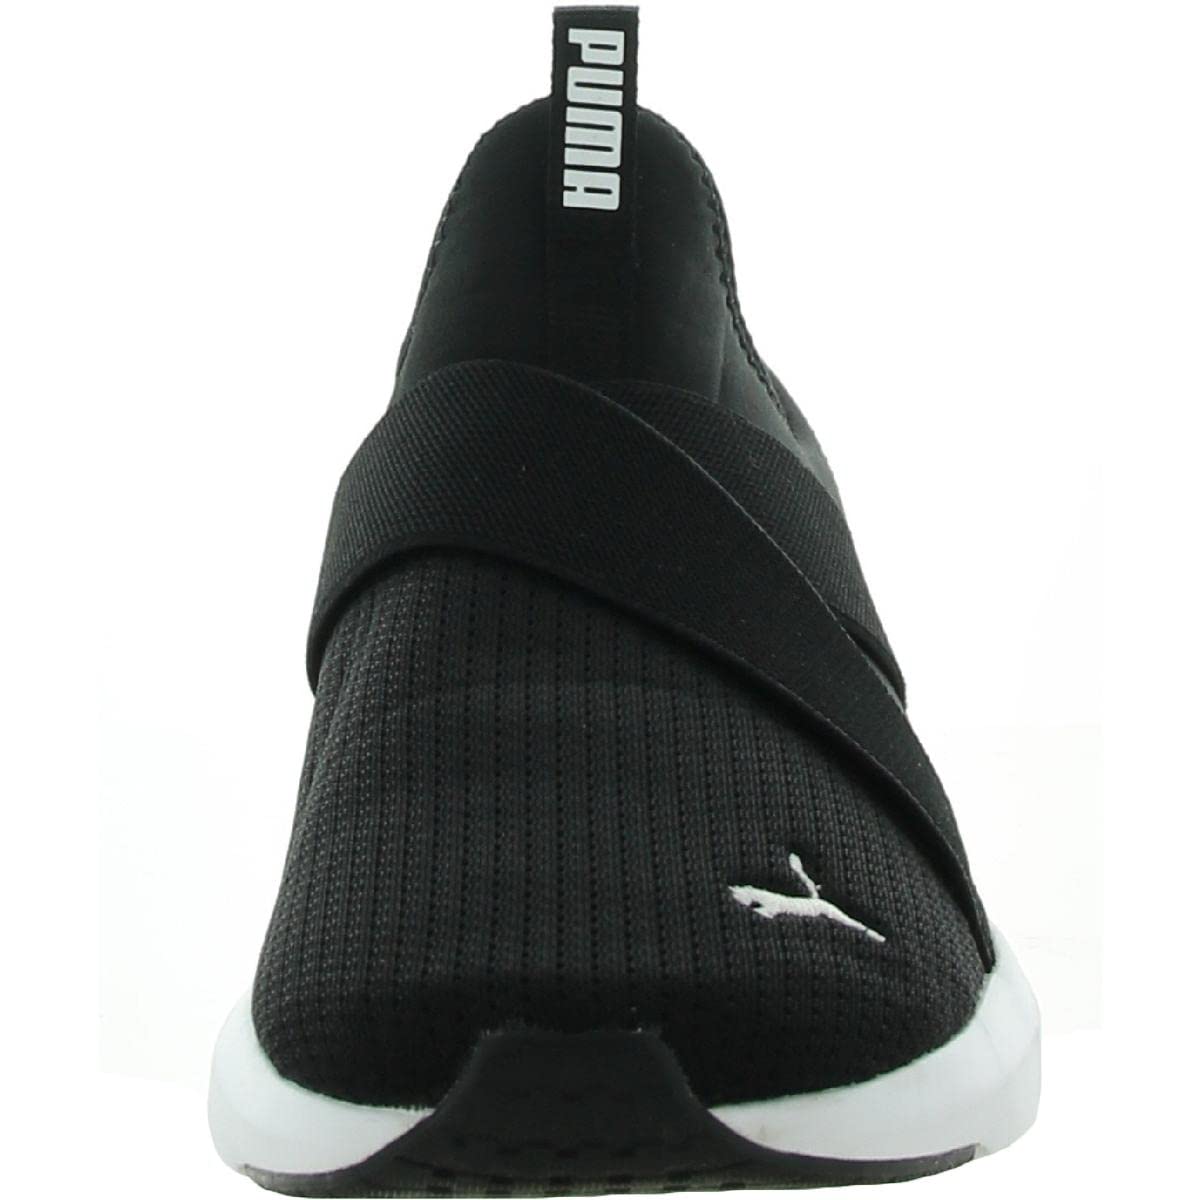 PUMA Womens Chroma Workout Athletic and Training Shoes Black 7.5 Medium (B,M)